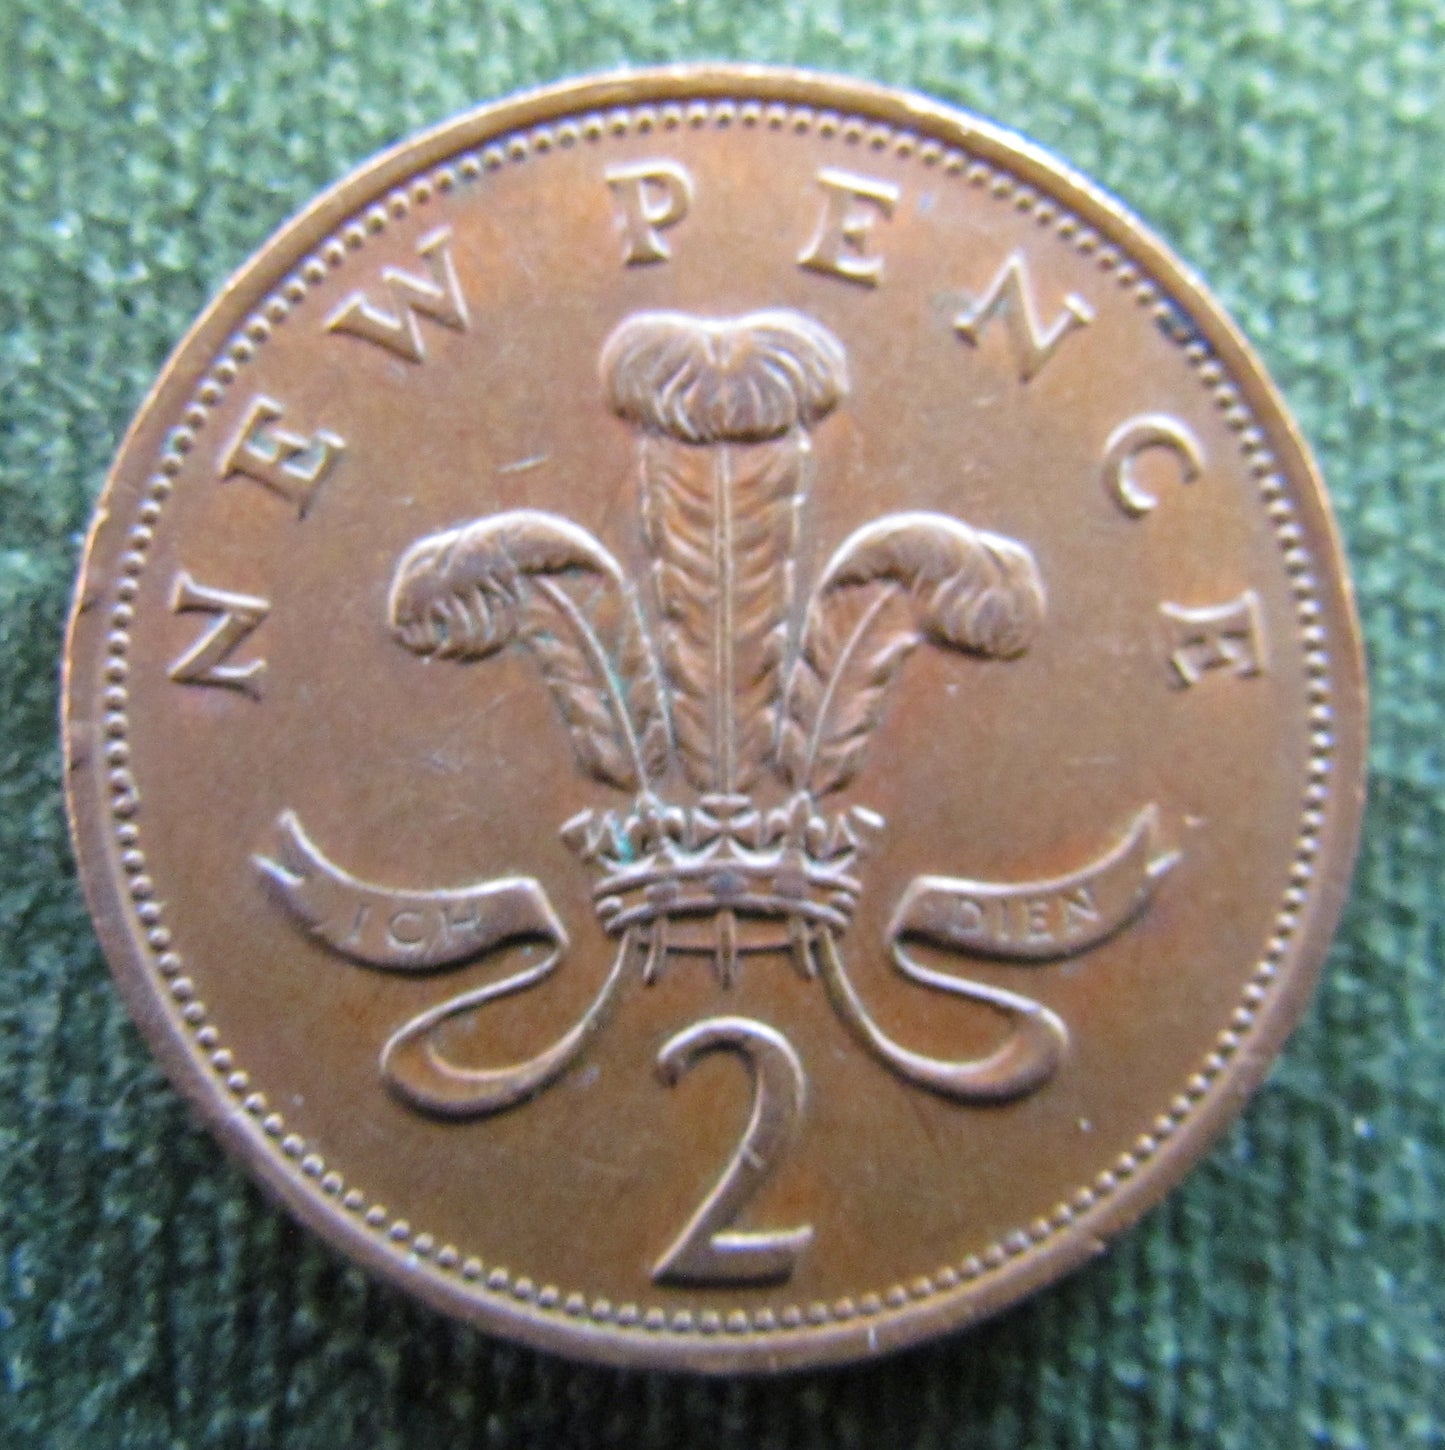 GB British UK English 1980 2 New Pence Queen Elizabeth II Coin